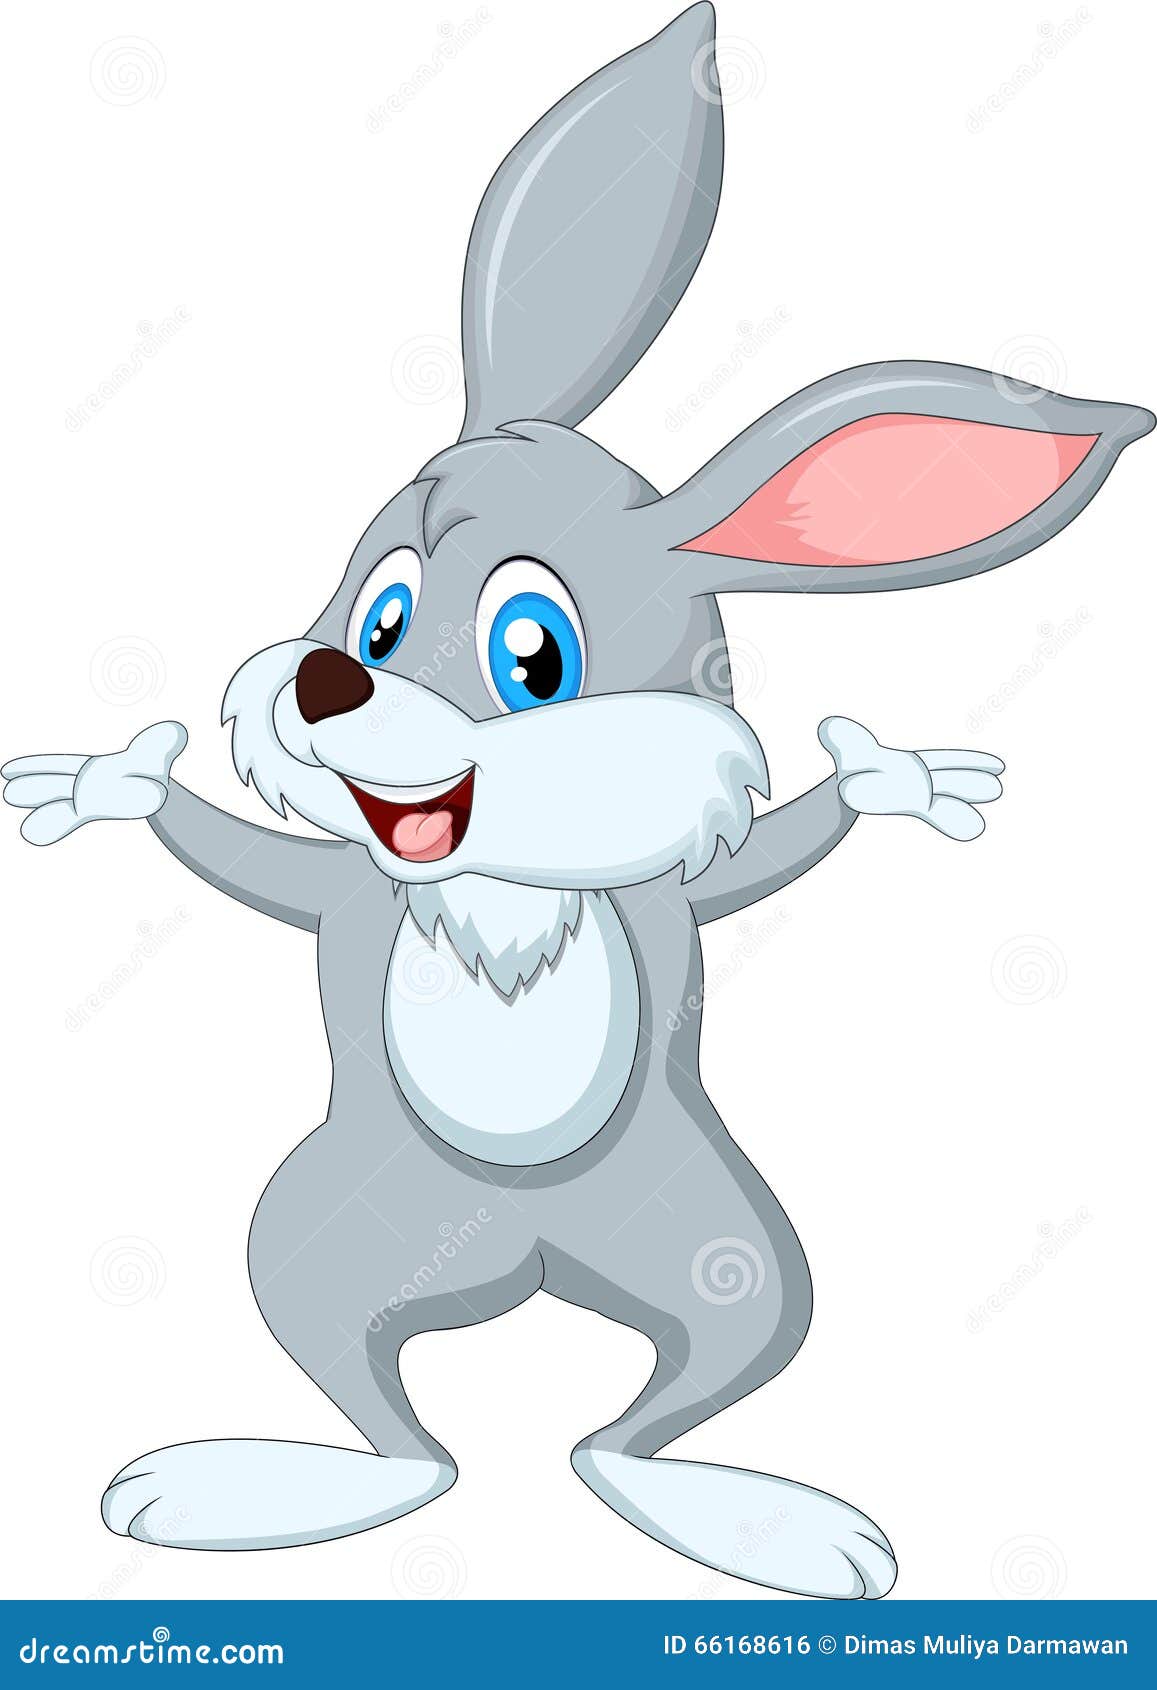 Cartoon rabbit standing stock illustration. Illustration of laugh - 66168616